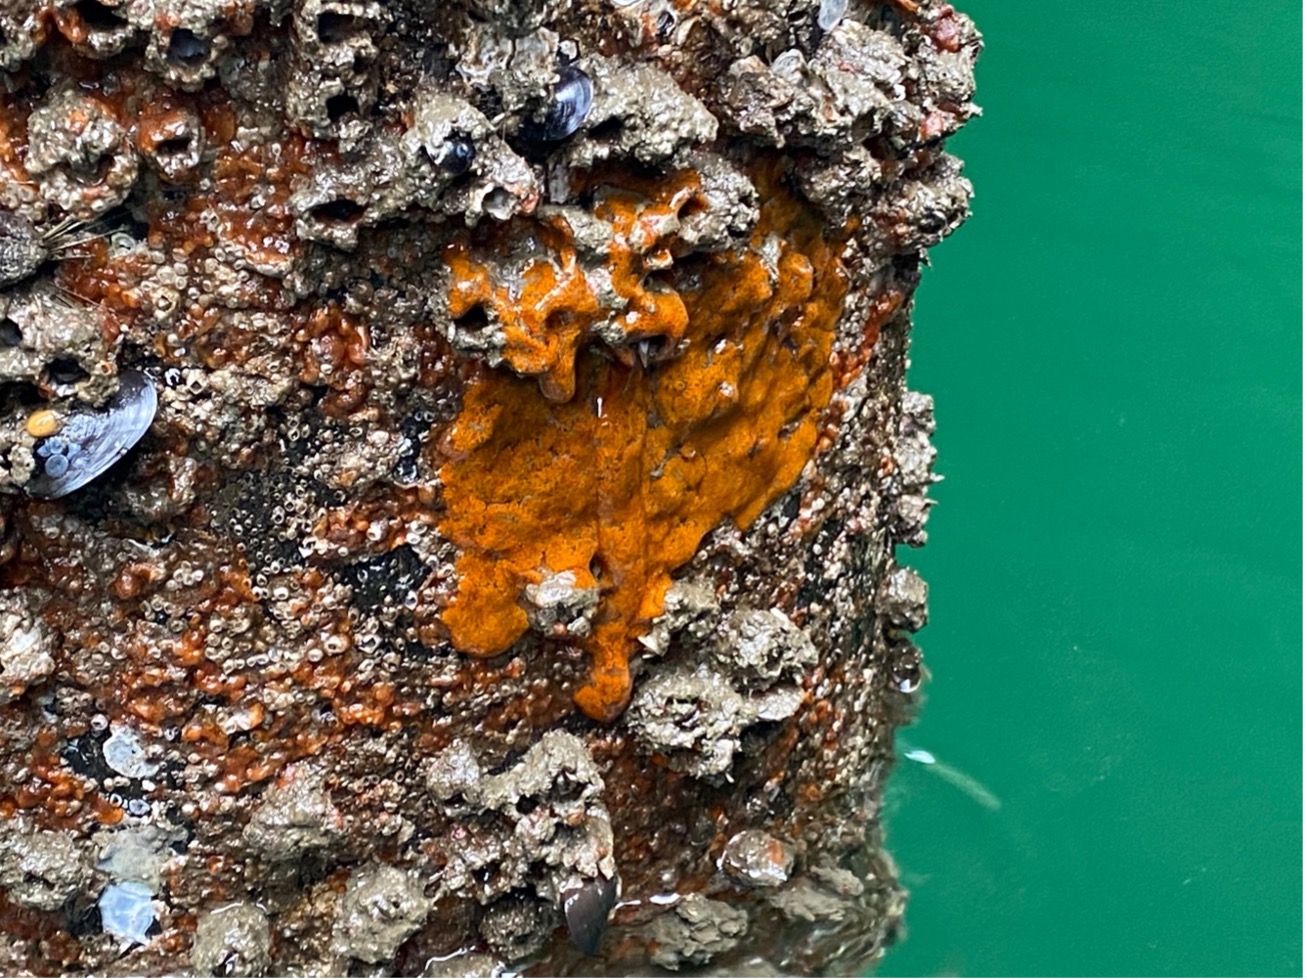 invasive tunicates buildup